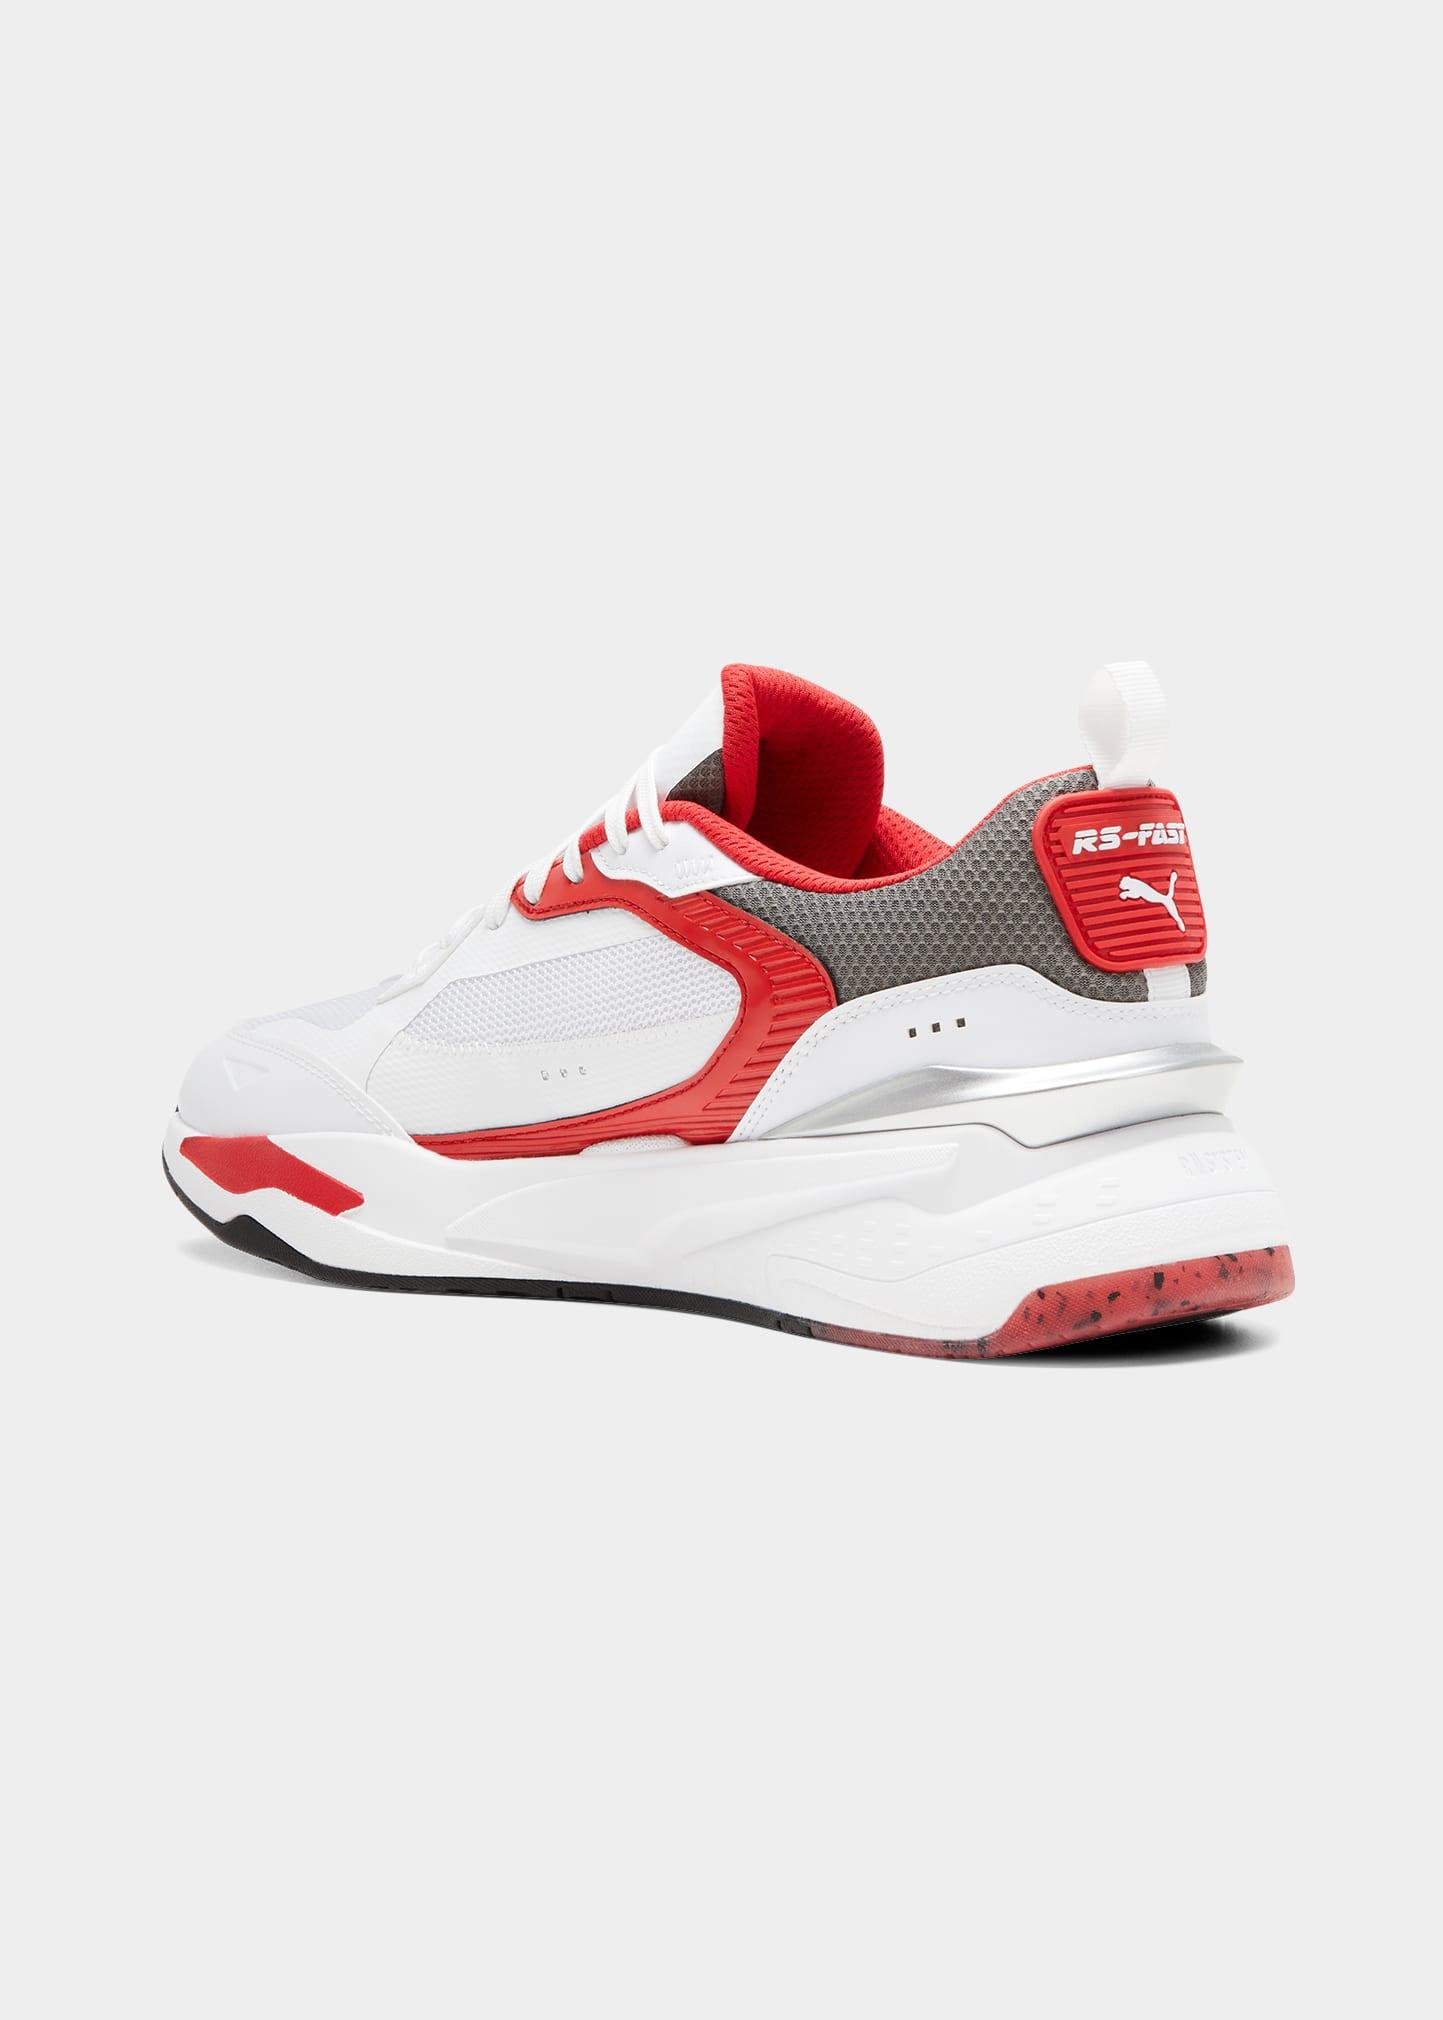 Kosciuszko Primer ministro Barón PUMA X Ferrari Rs-fast Mesh Runner Sneakers in Red for Men | Lyst